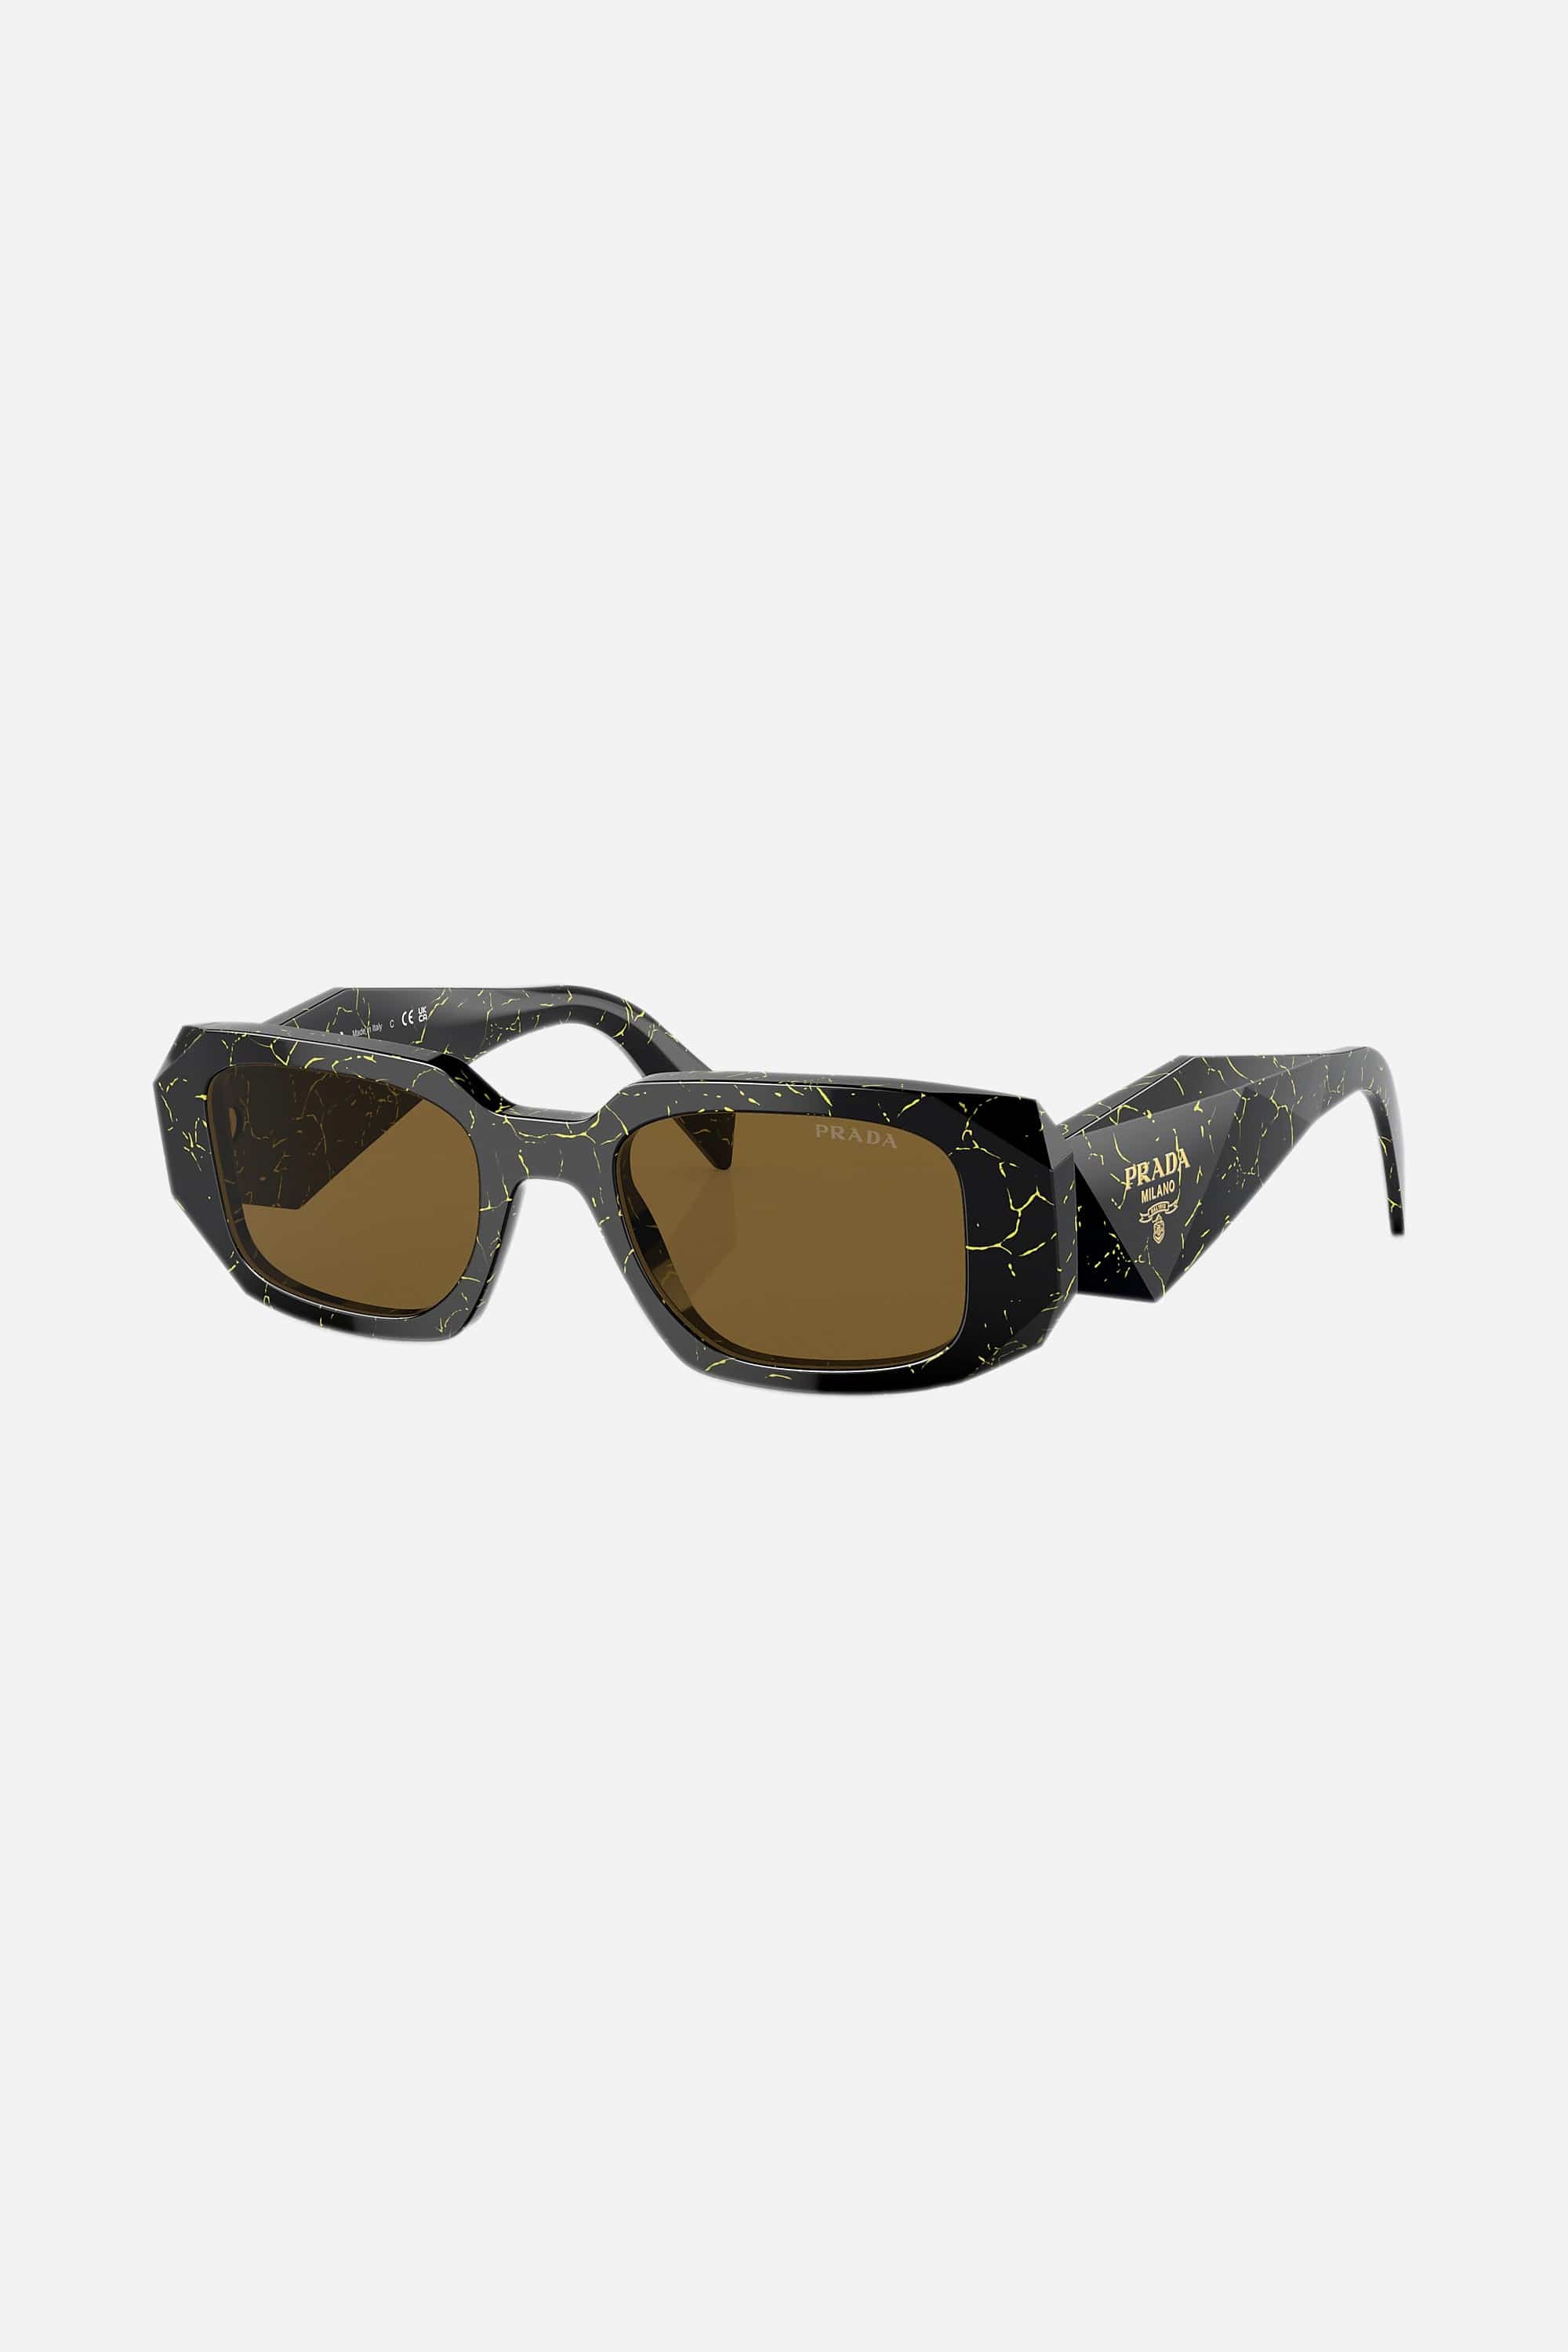 Prada symbol black and yellow marble oval sunglasses - Eyewear Club